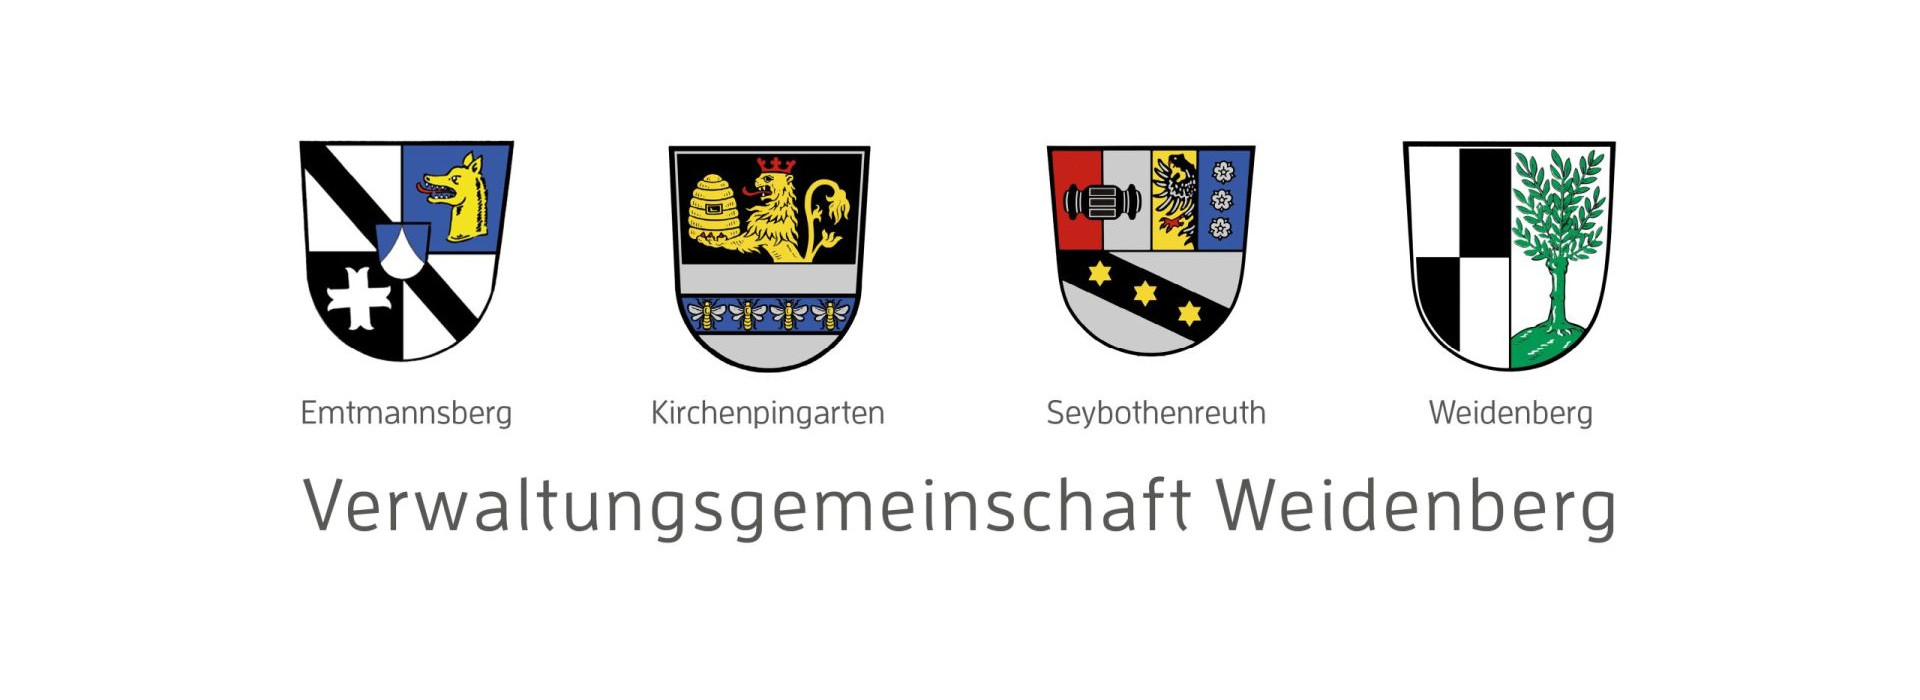 Verwaltungsgemeinschaft Weidenberg alle Wappen